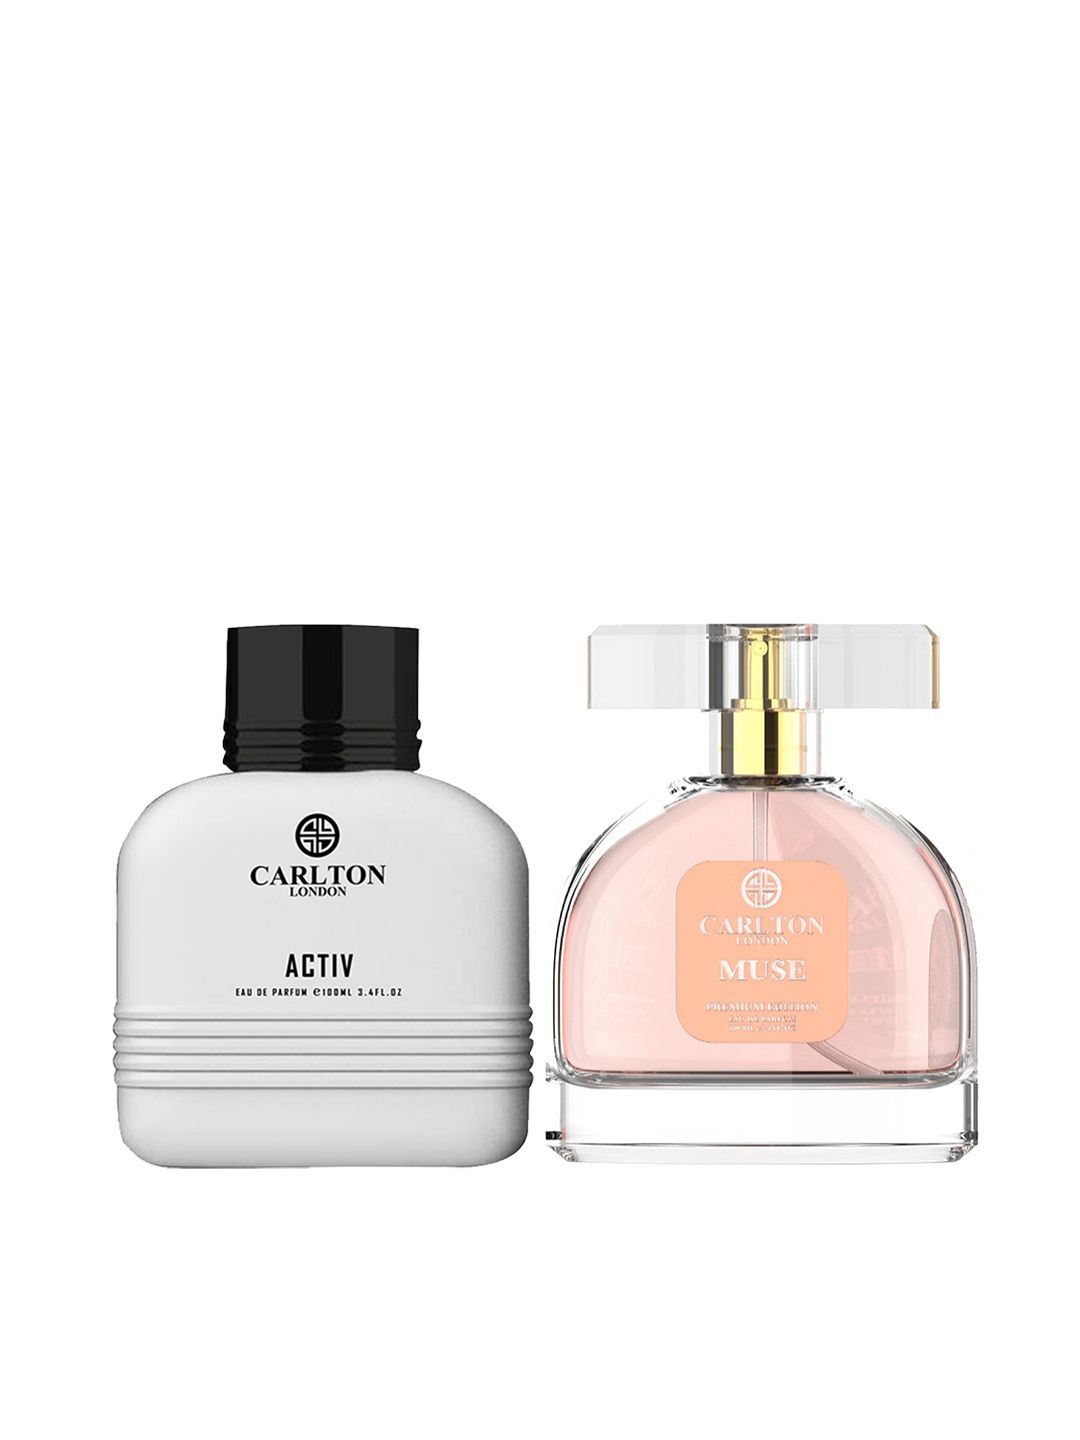 Carlton London Set of Men Activ & Women Muse Eau De Parfum - 100 ml Each Price in India